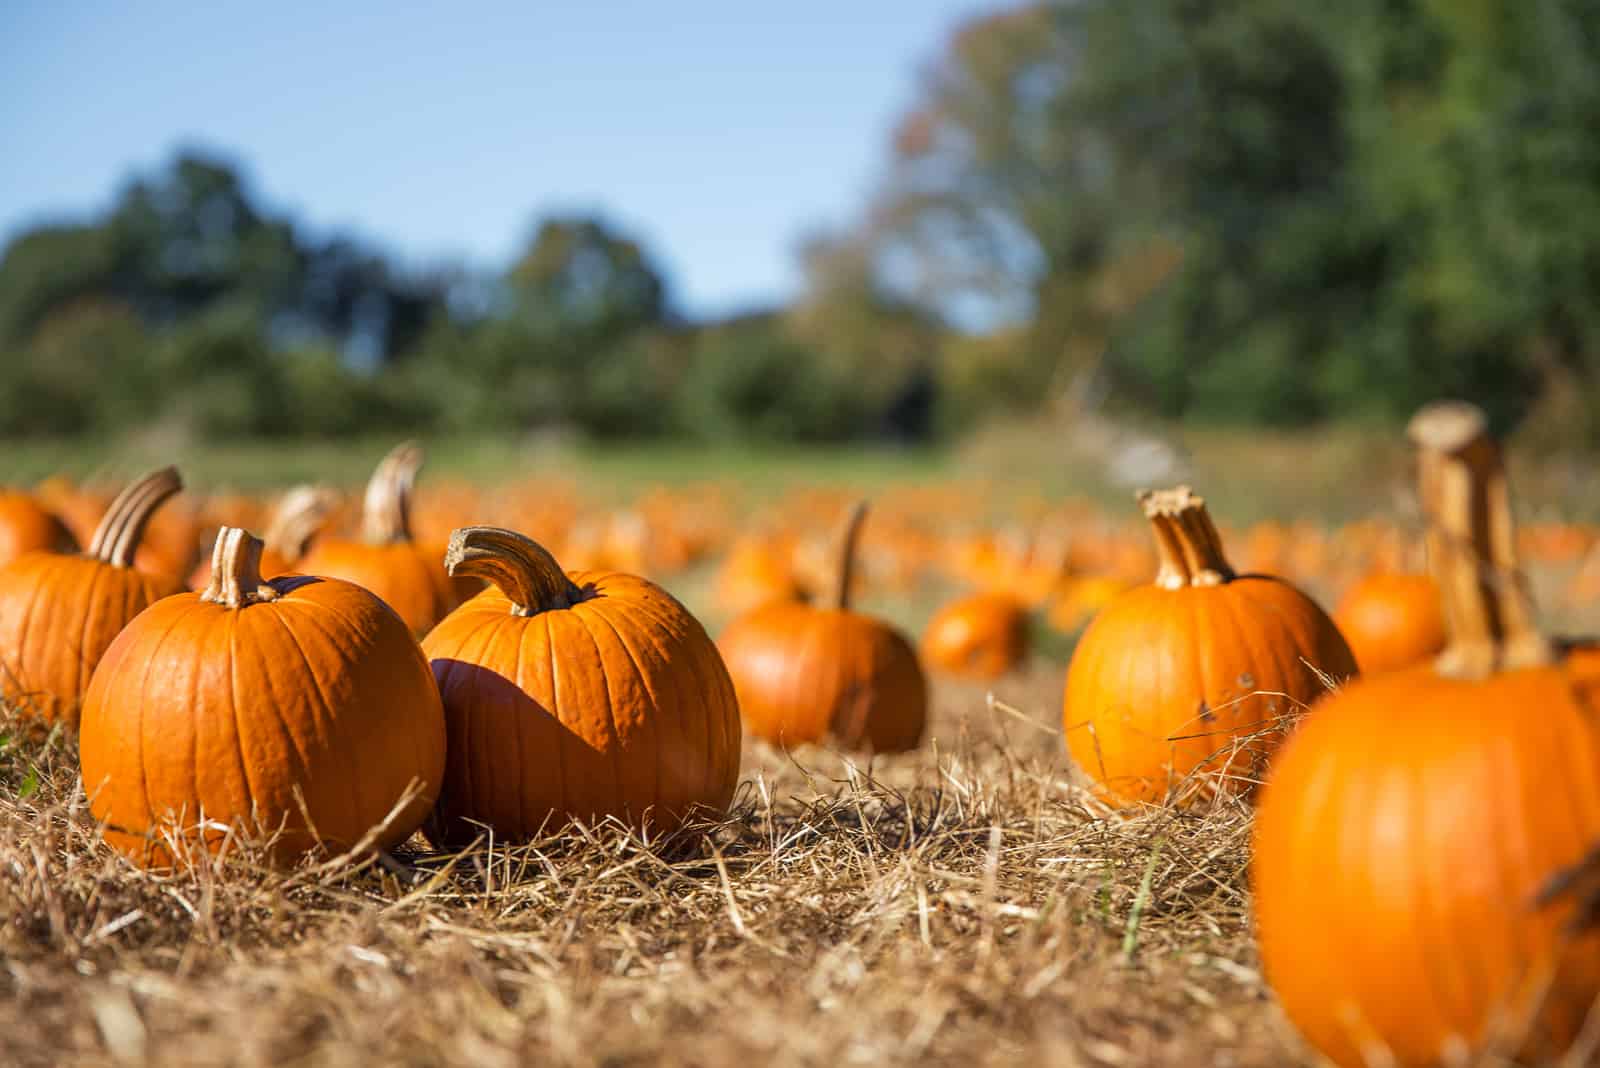 pumpkins outdoors on ground